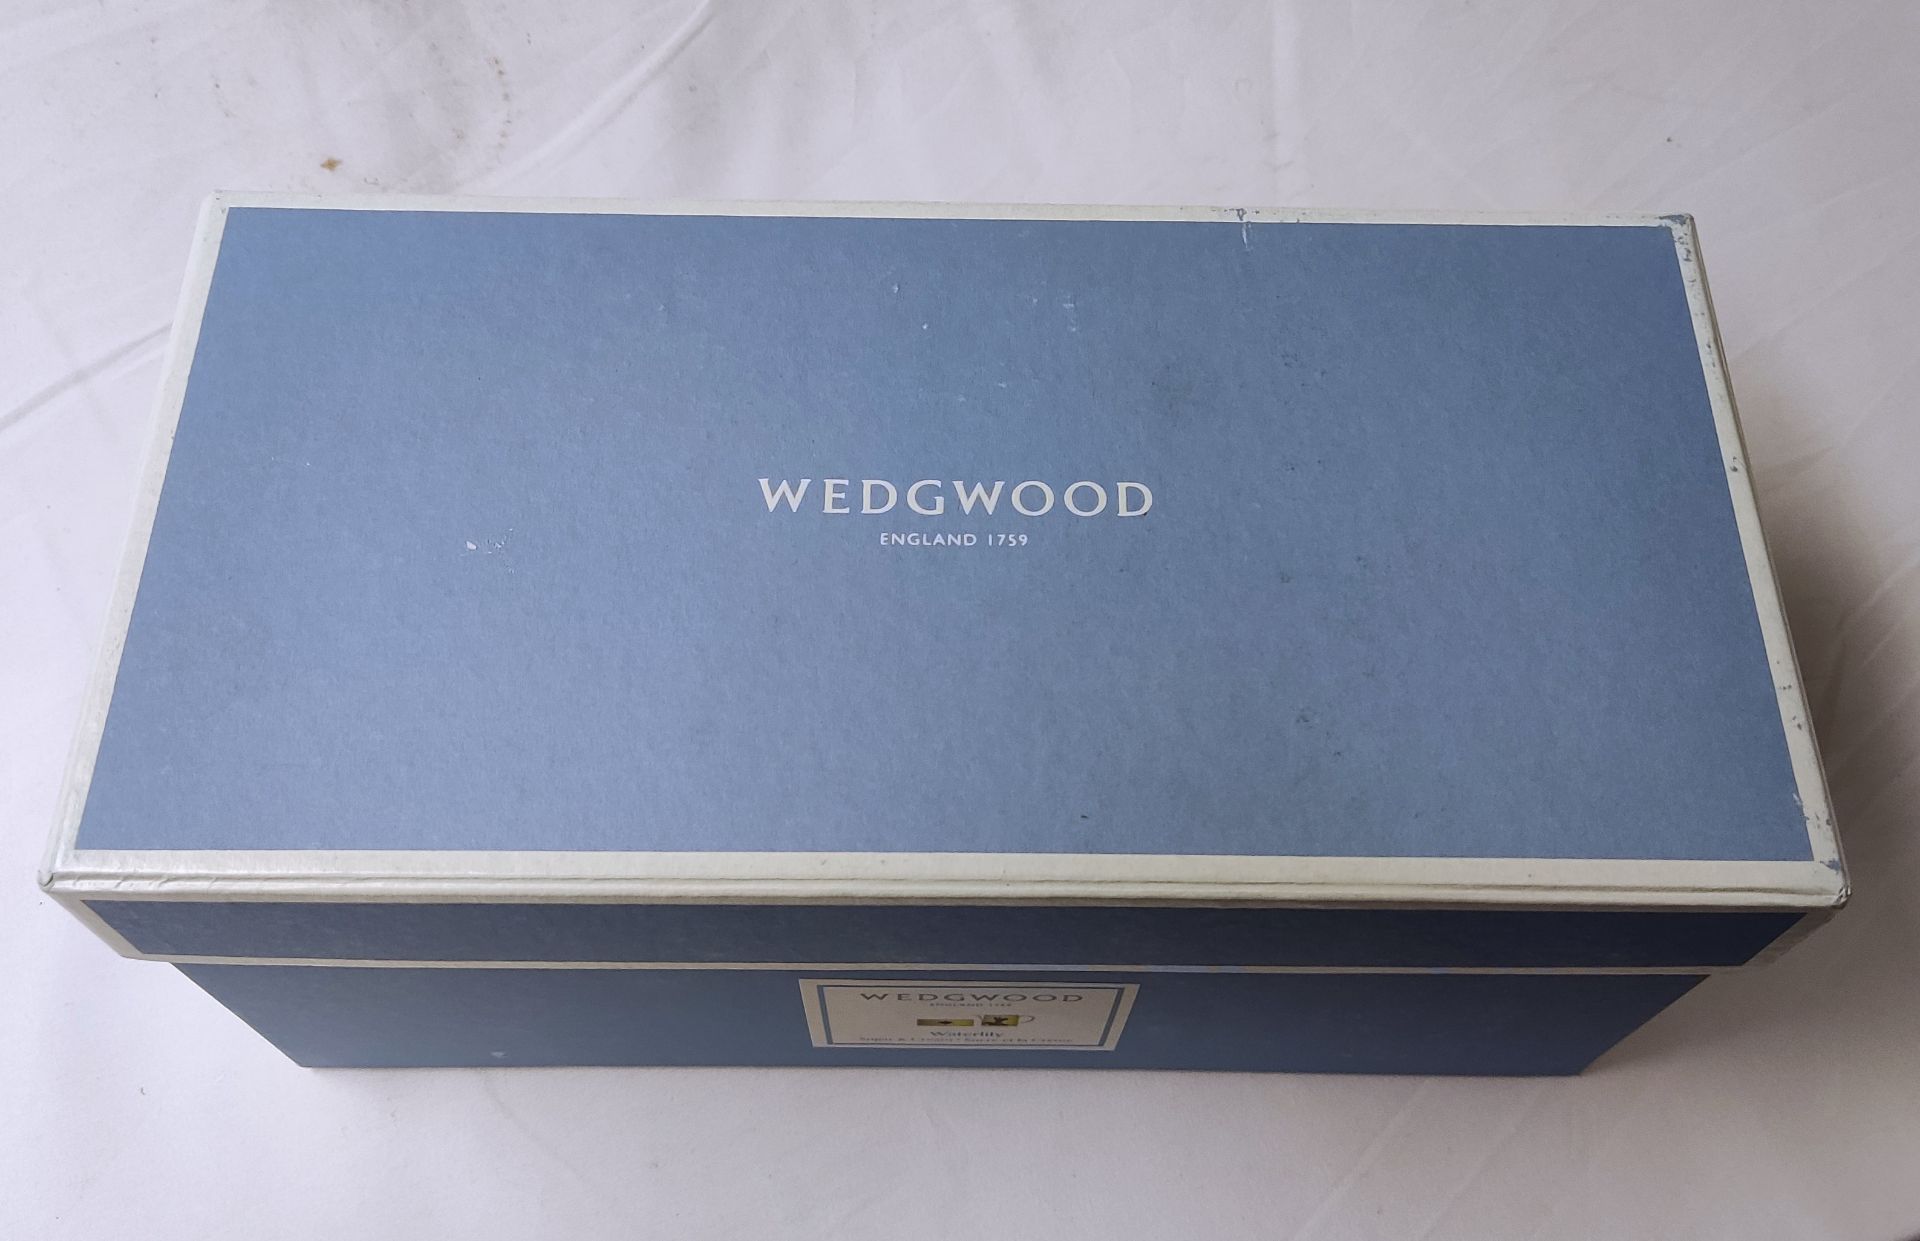 1 x WEDGWOOD Wonderlust Waterlily Fine Bone China Sugar & Creamer Set - New/Boxed - RRP £80 - - Image 15 of 22